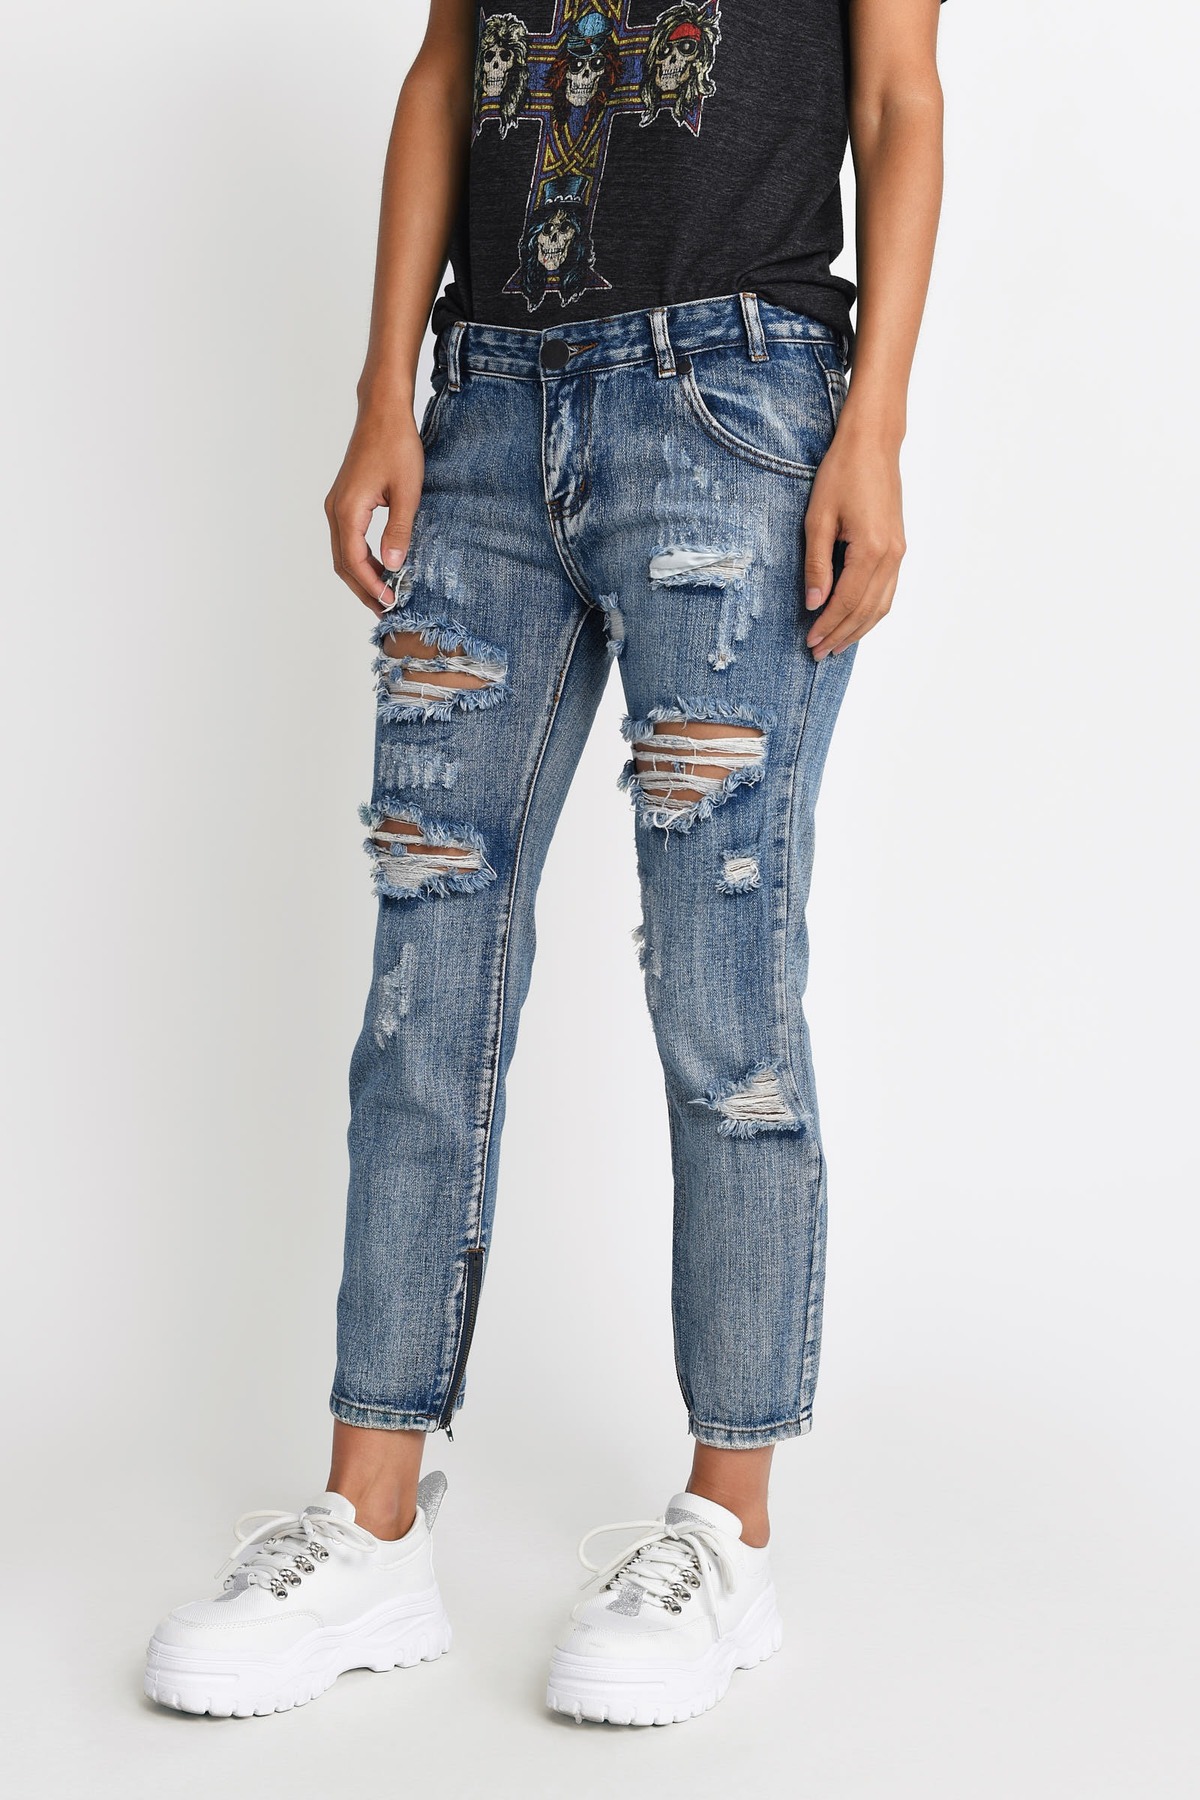 Harper Distressed Skinny Jeans in Marina - $14 | Tobi US